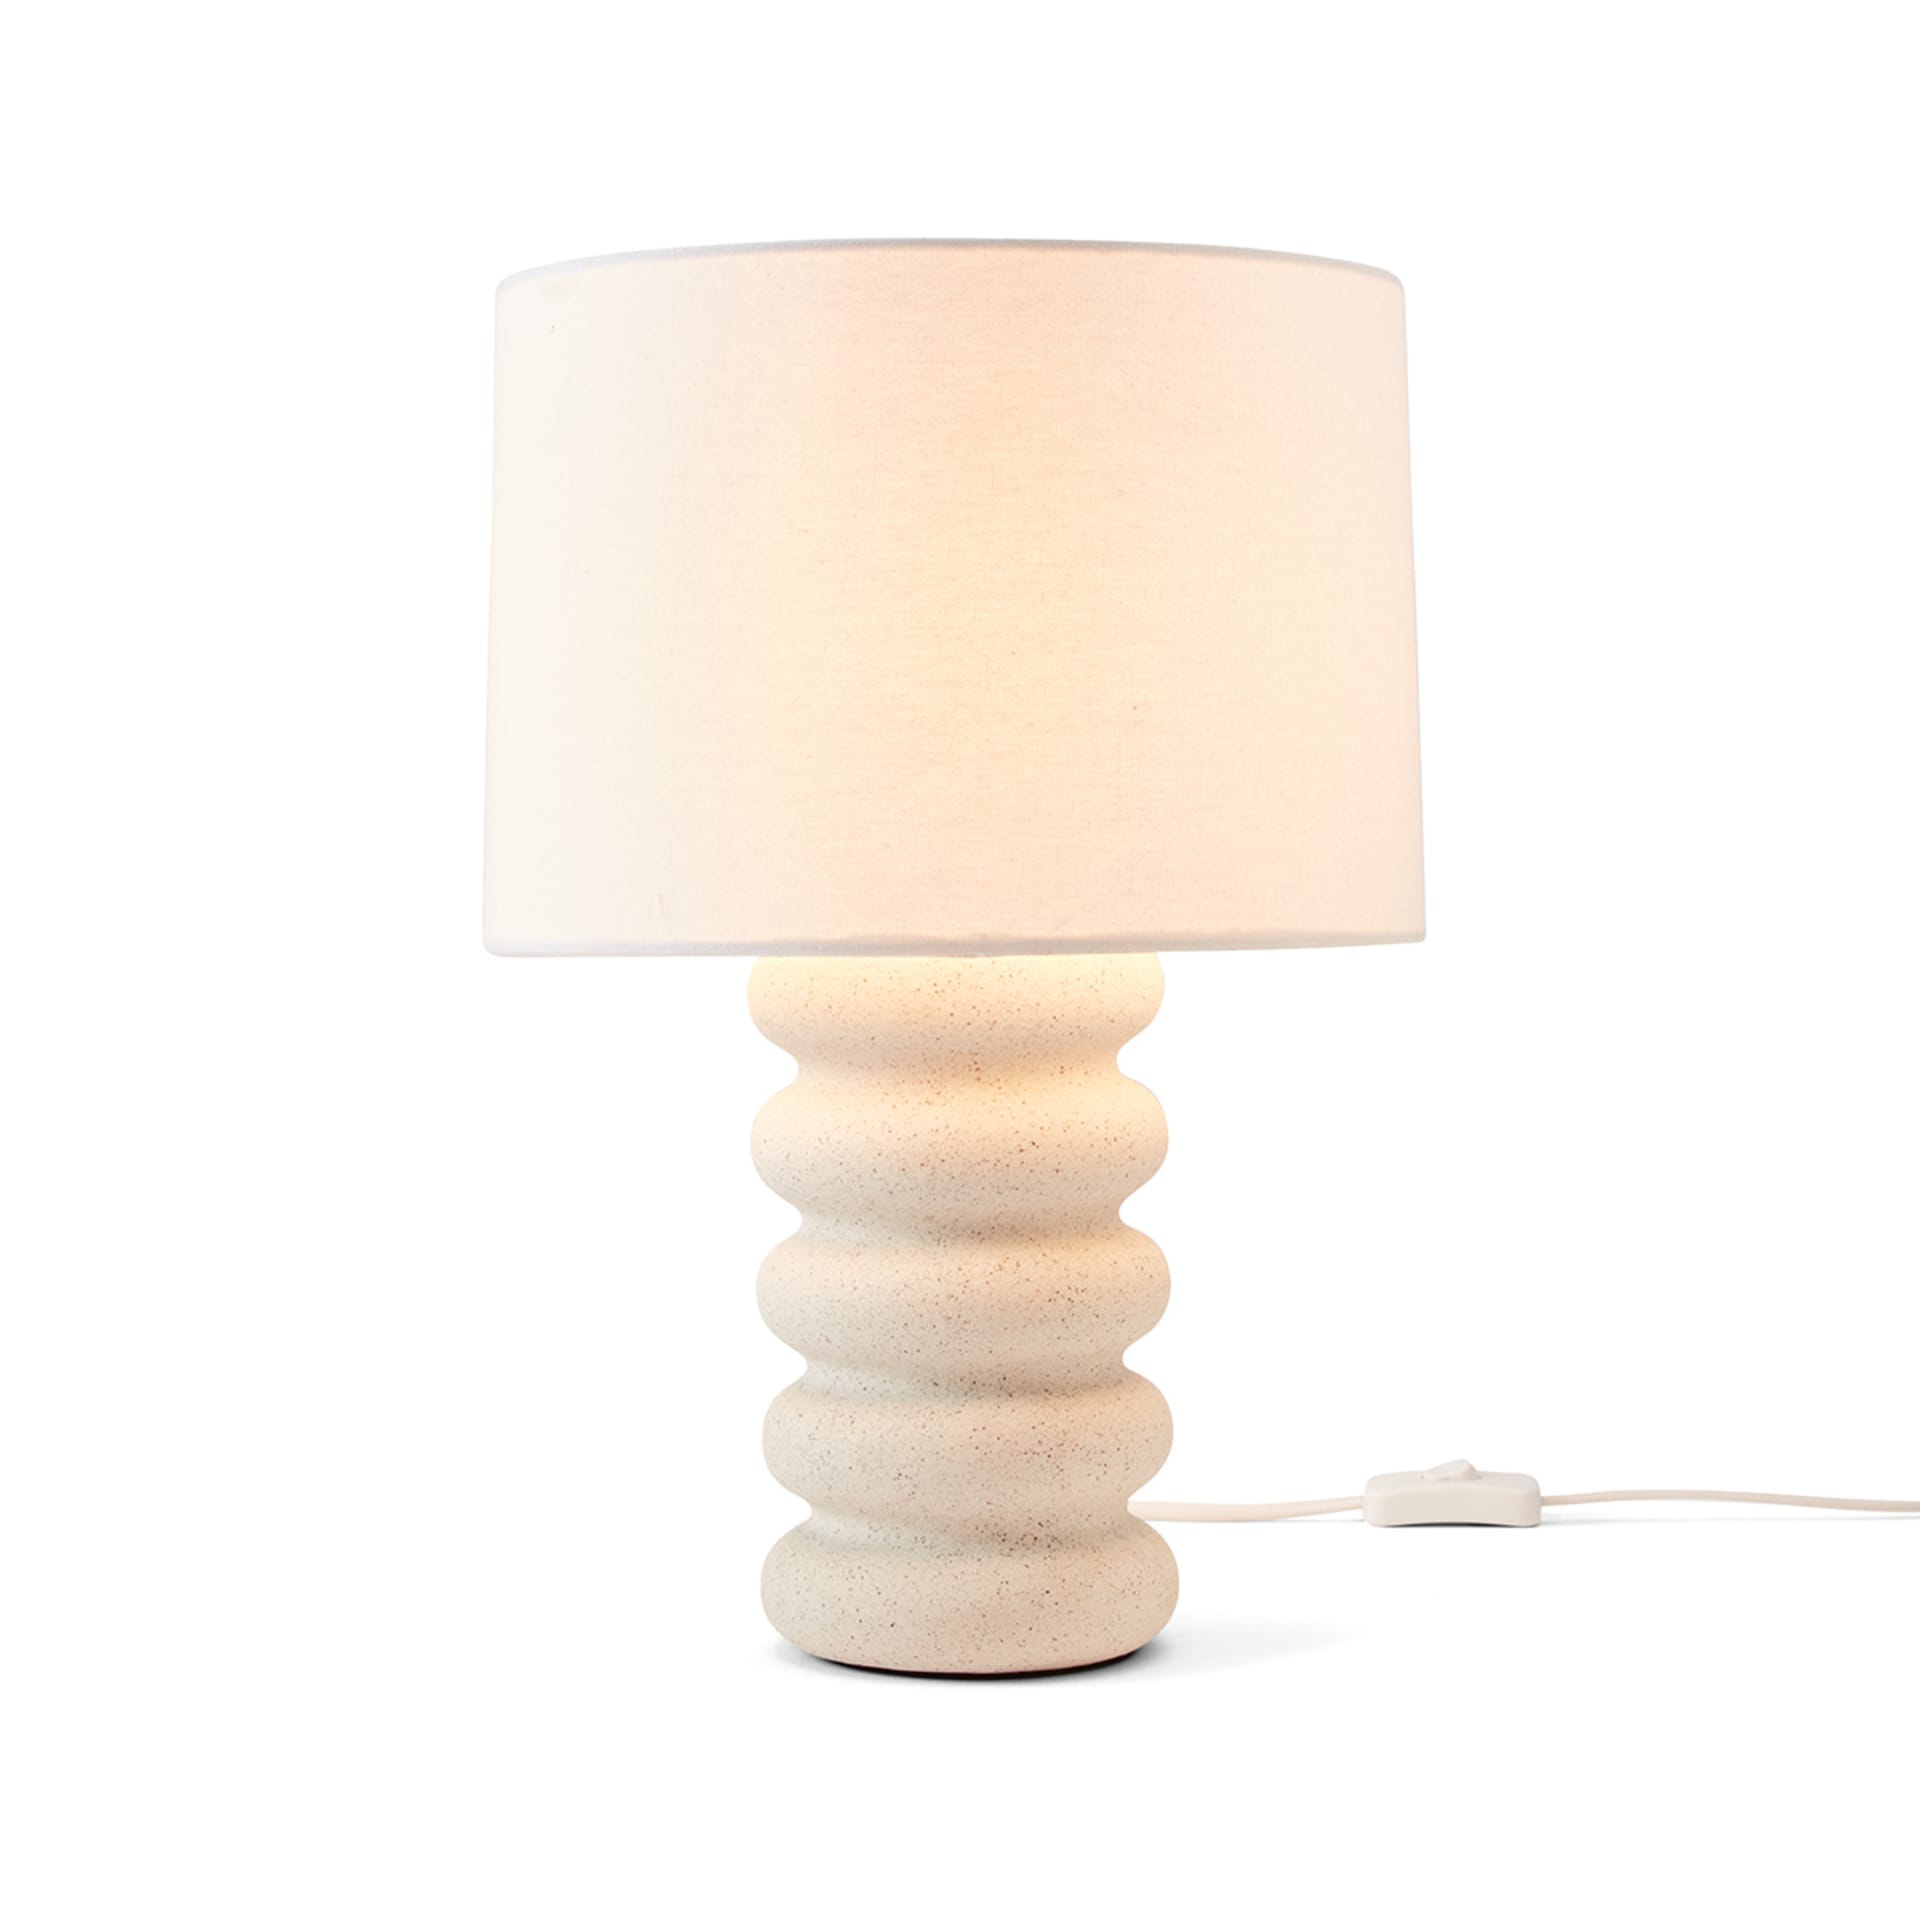 Hudson Table Lamp - Kmart